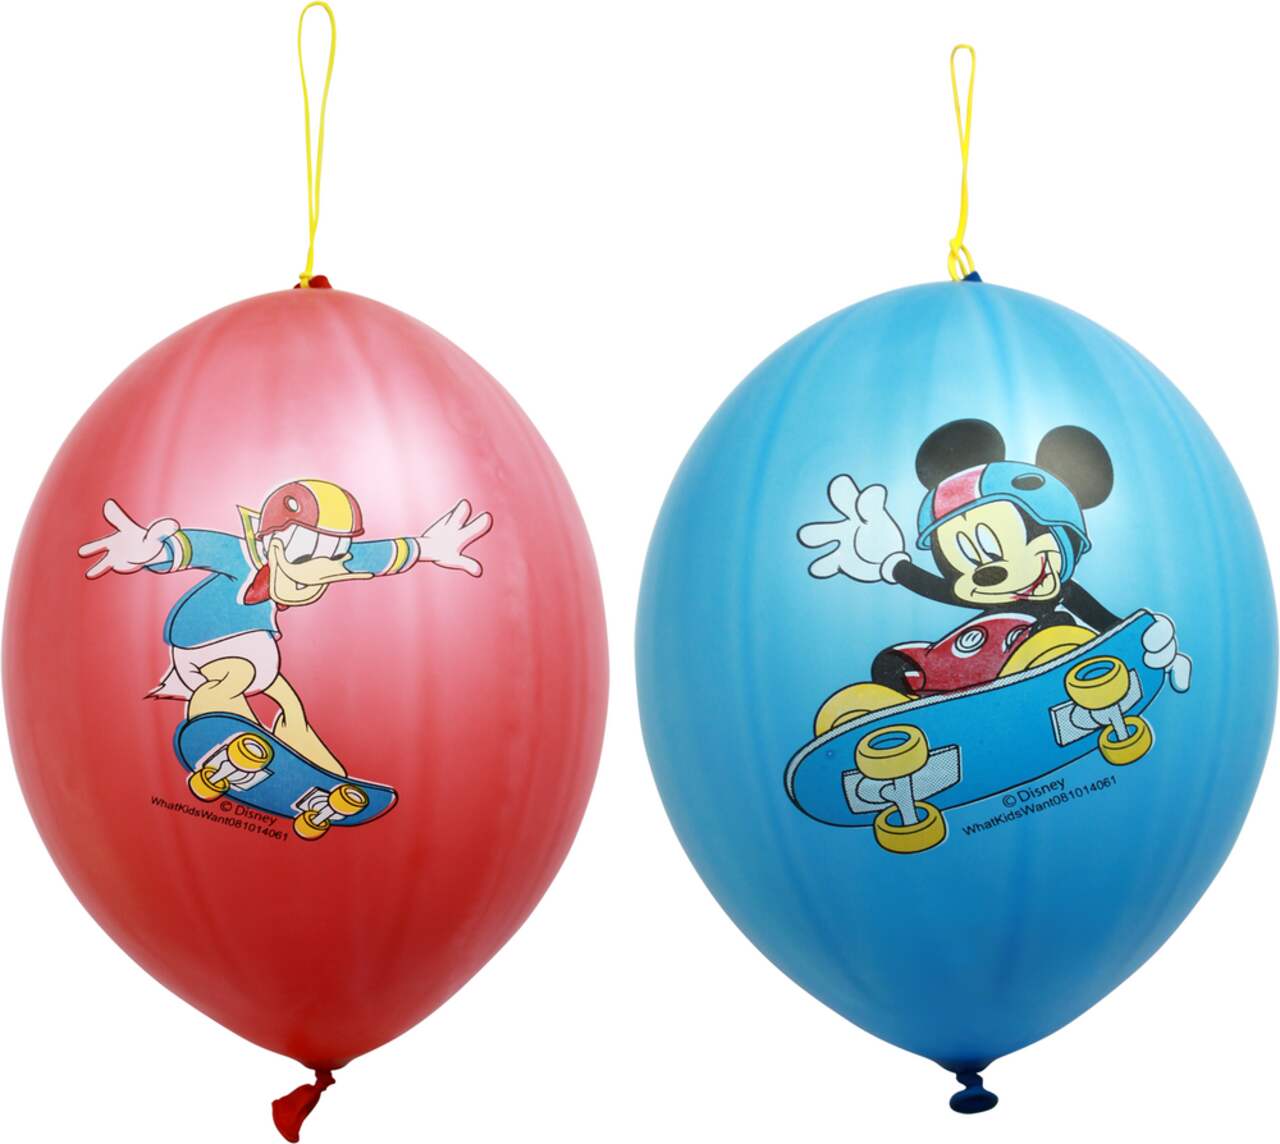 Ballon Chiffre Chien Bluey Or Disney - Anniversaire 